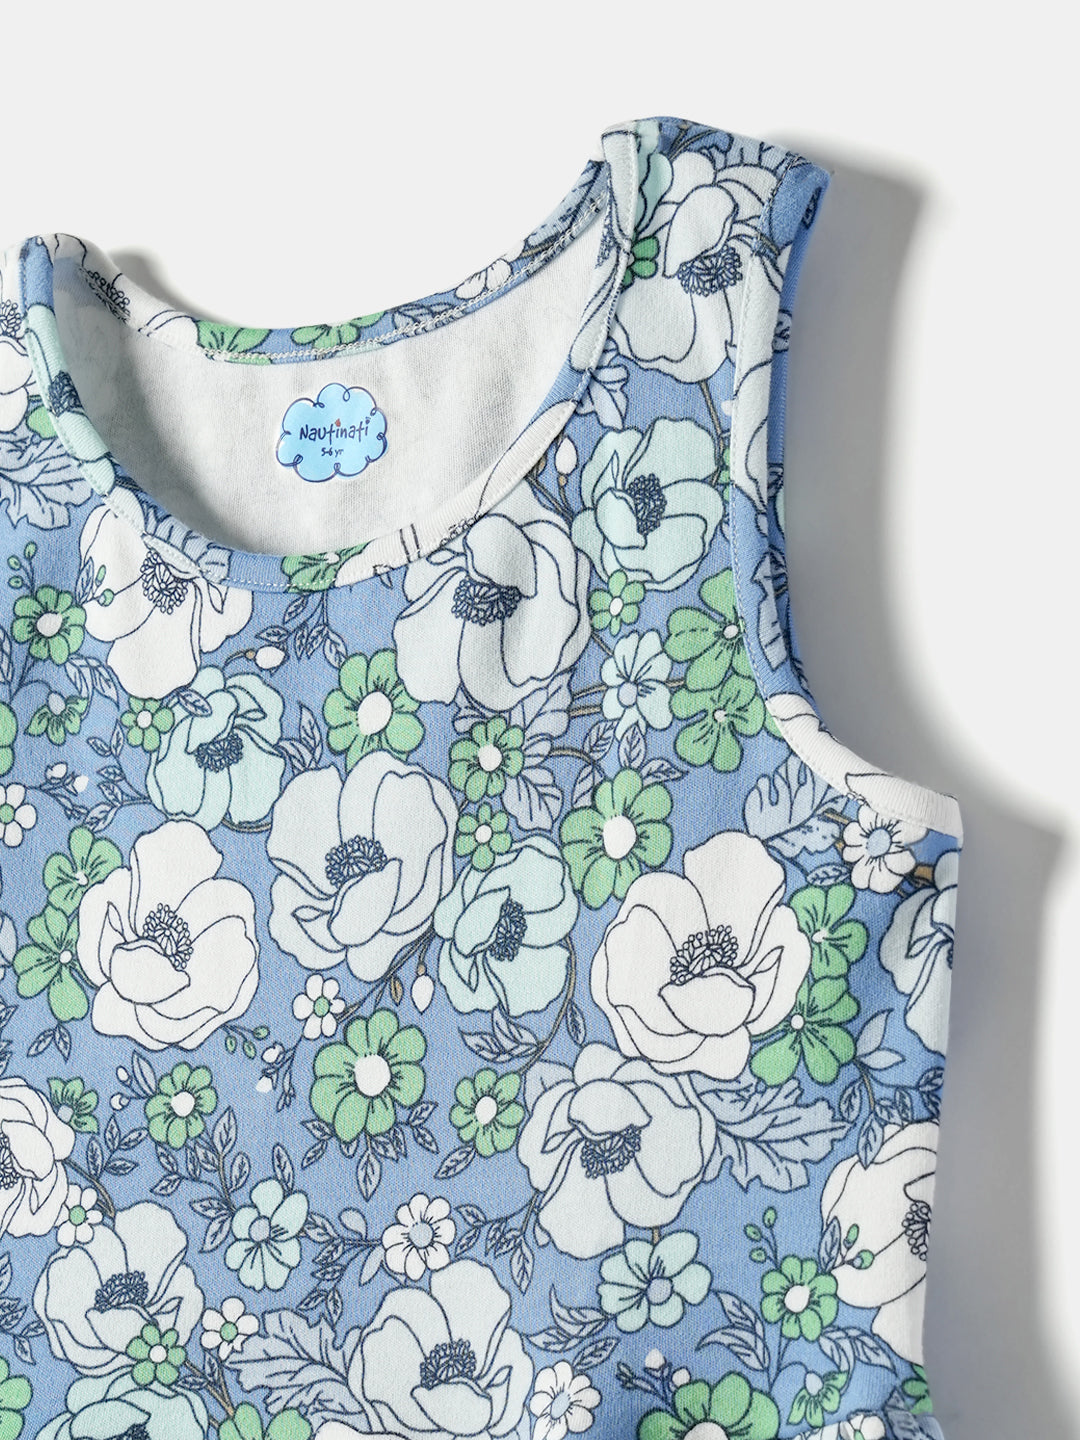 Girls Blue Floral Printed Sleeveless Round Neck A-Line Dress